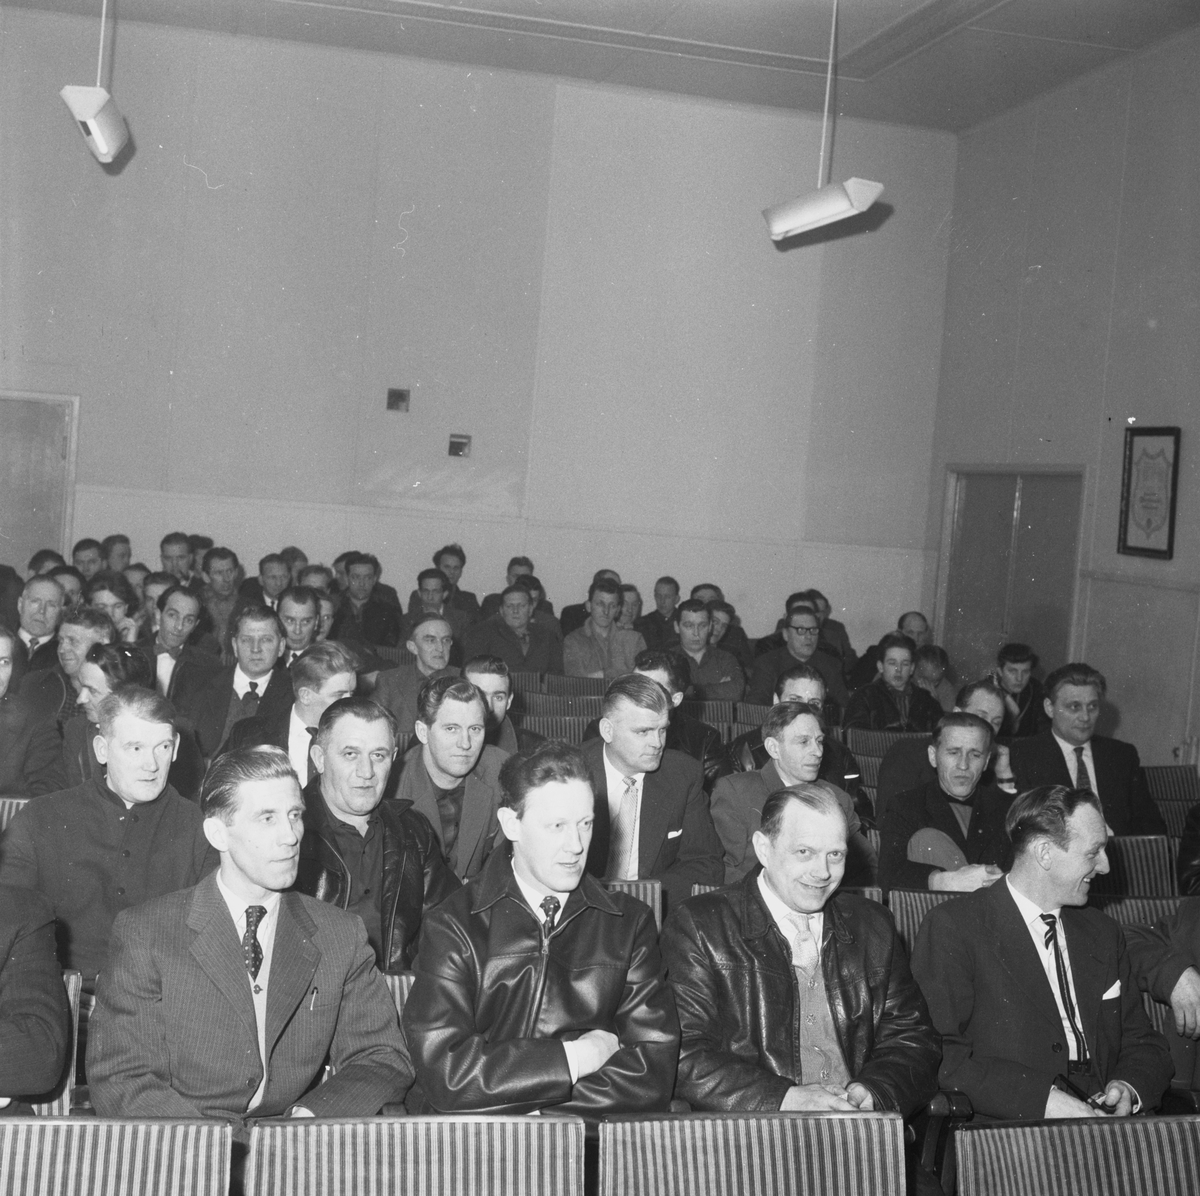 Gruvkonferens i Ställberg. 
9 februari 1959.